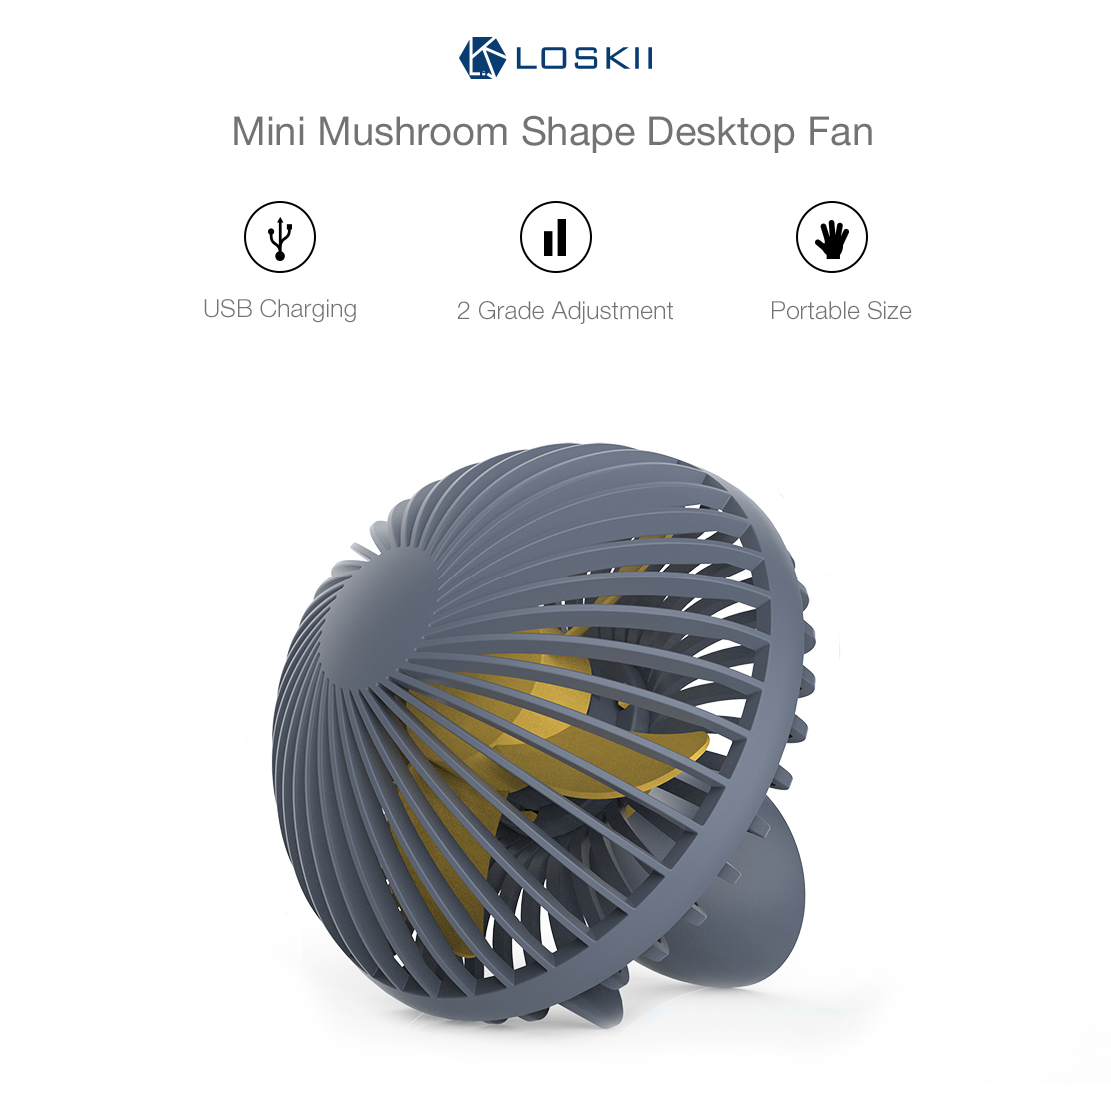 Loskii HF-200 Portable Mini Electronic Desktop Mushroom Shape Summer Cooling Fan 2 Grade Adjustment USB Charging Fan 30